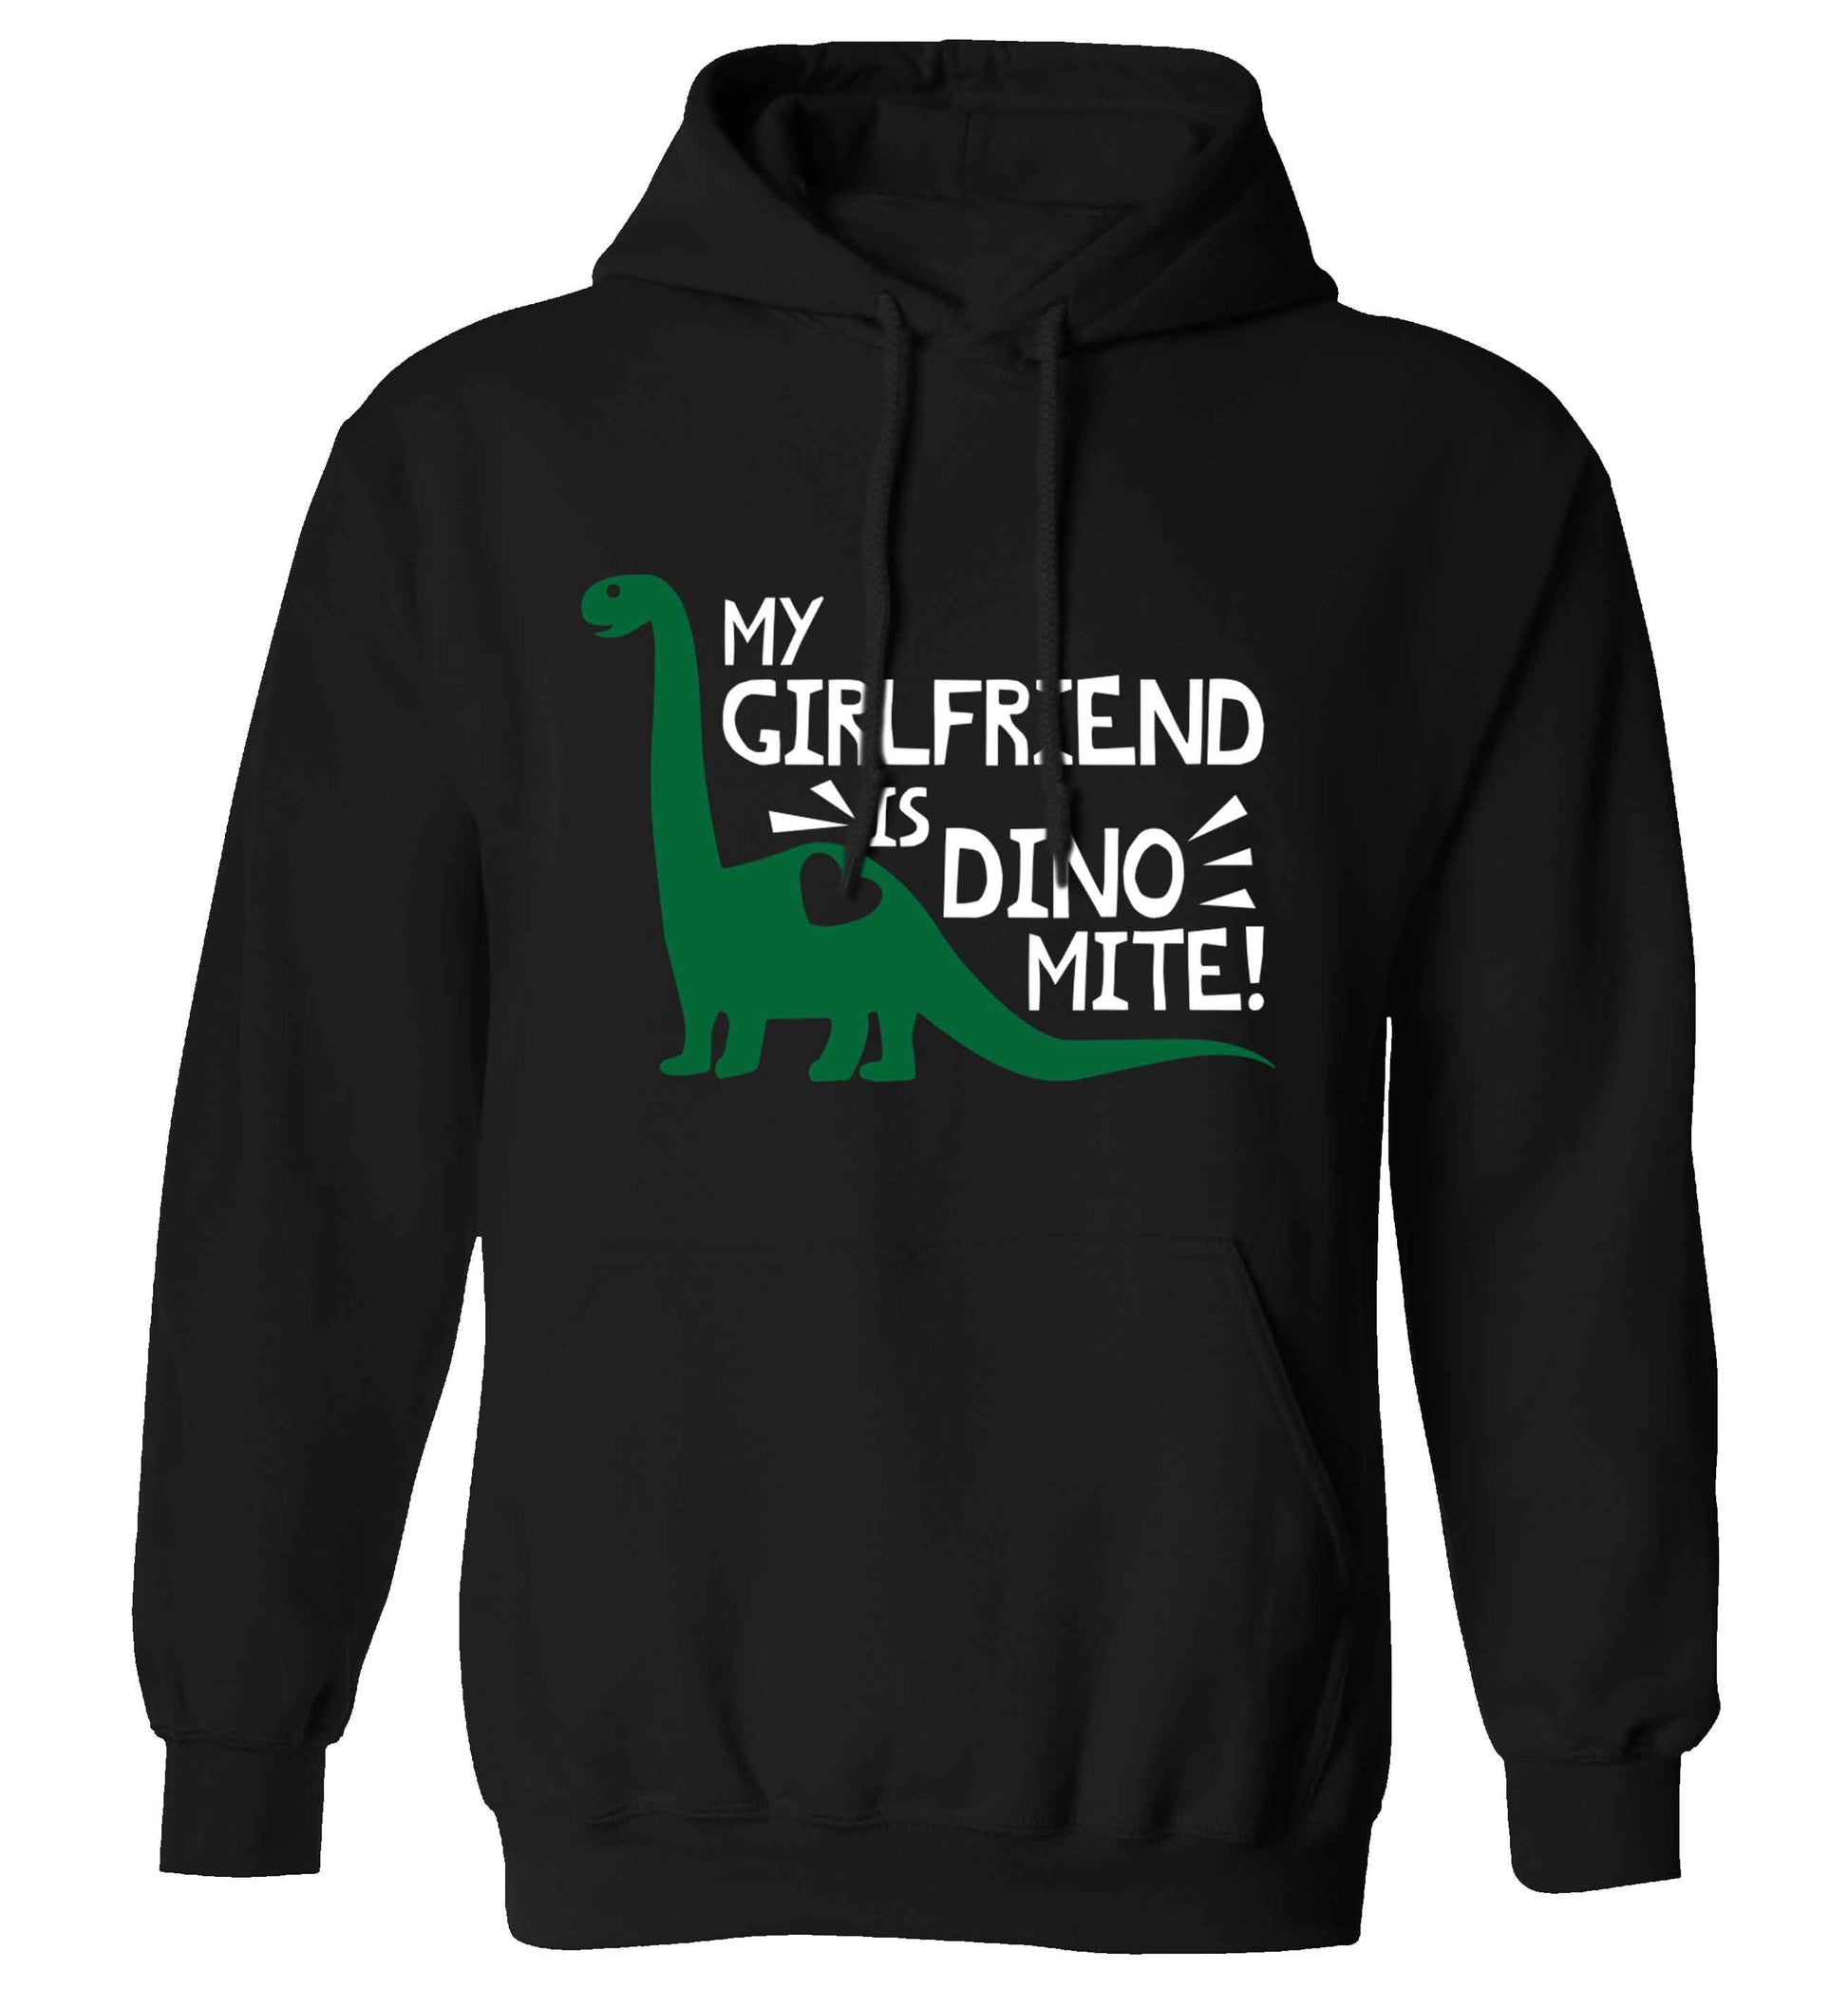 My girlfriend is dinomite! adults unisex black hoodie 2XL